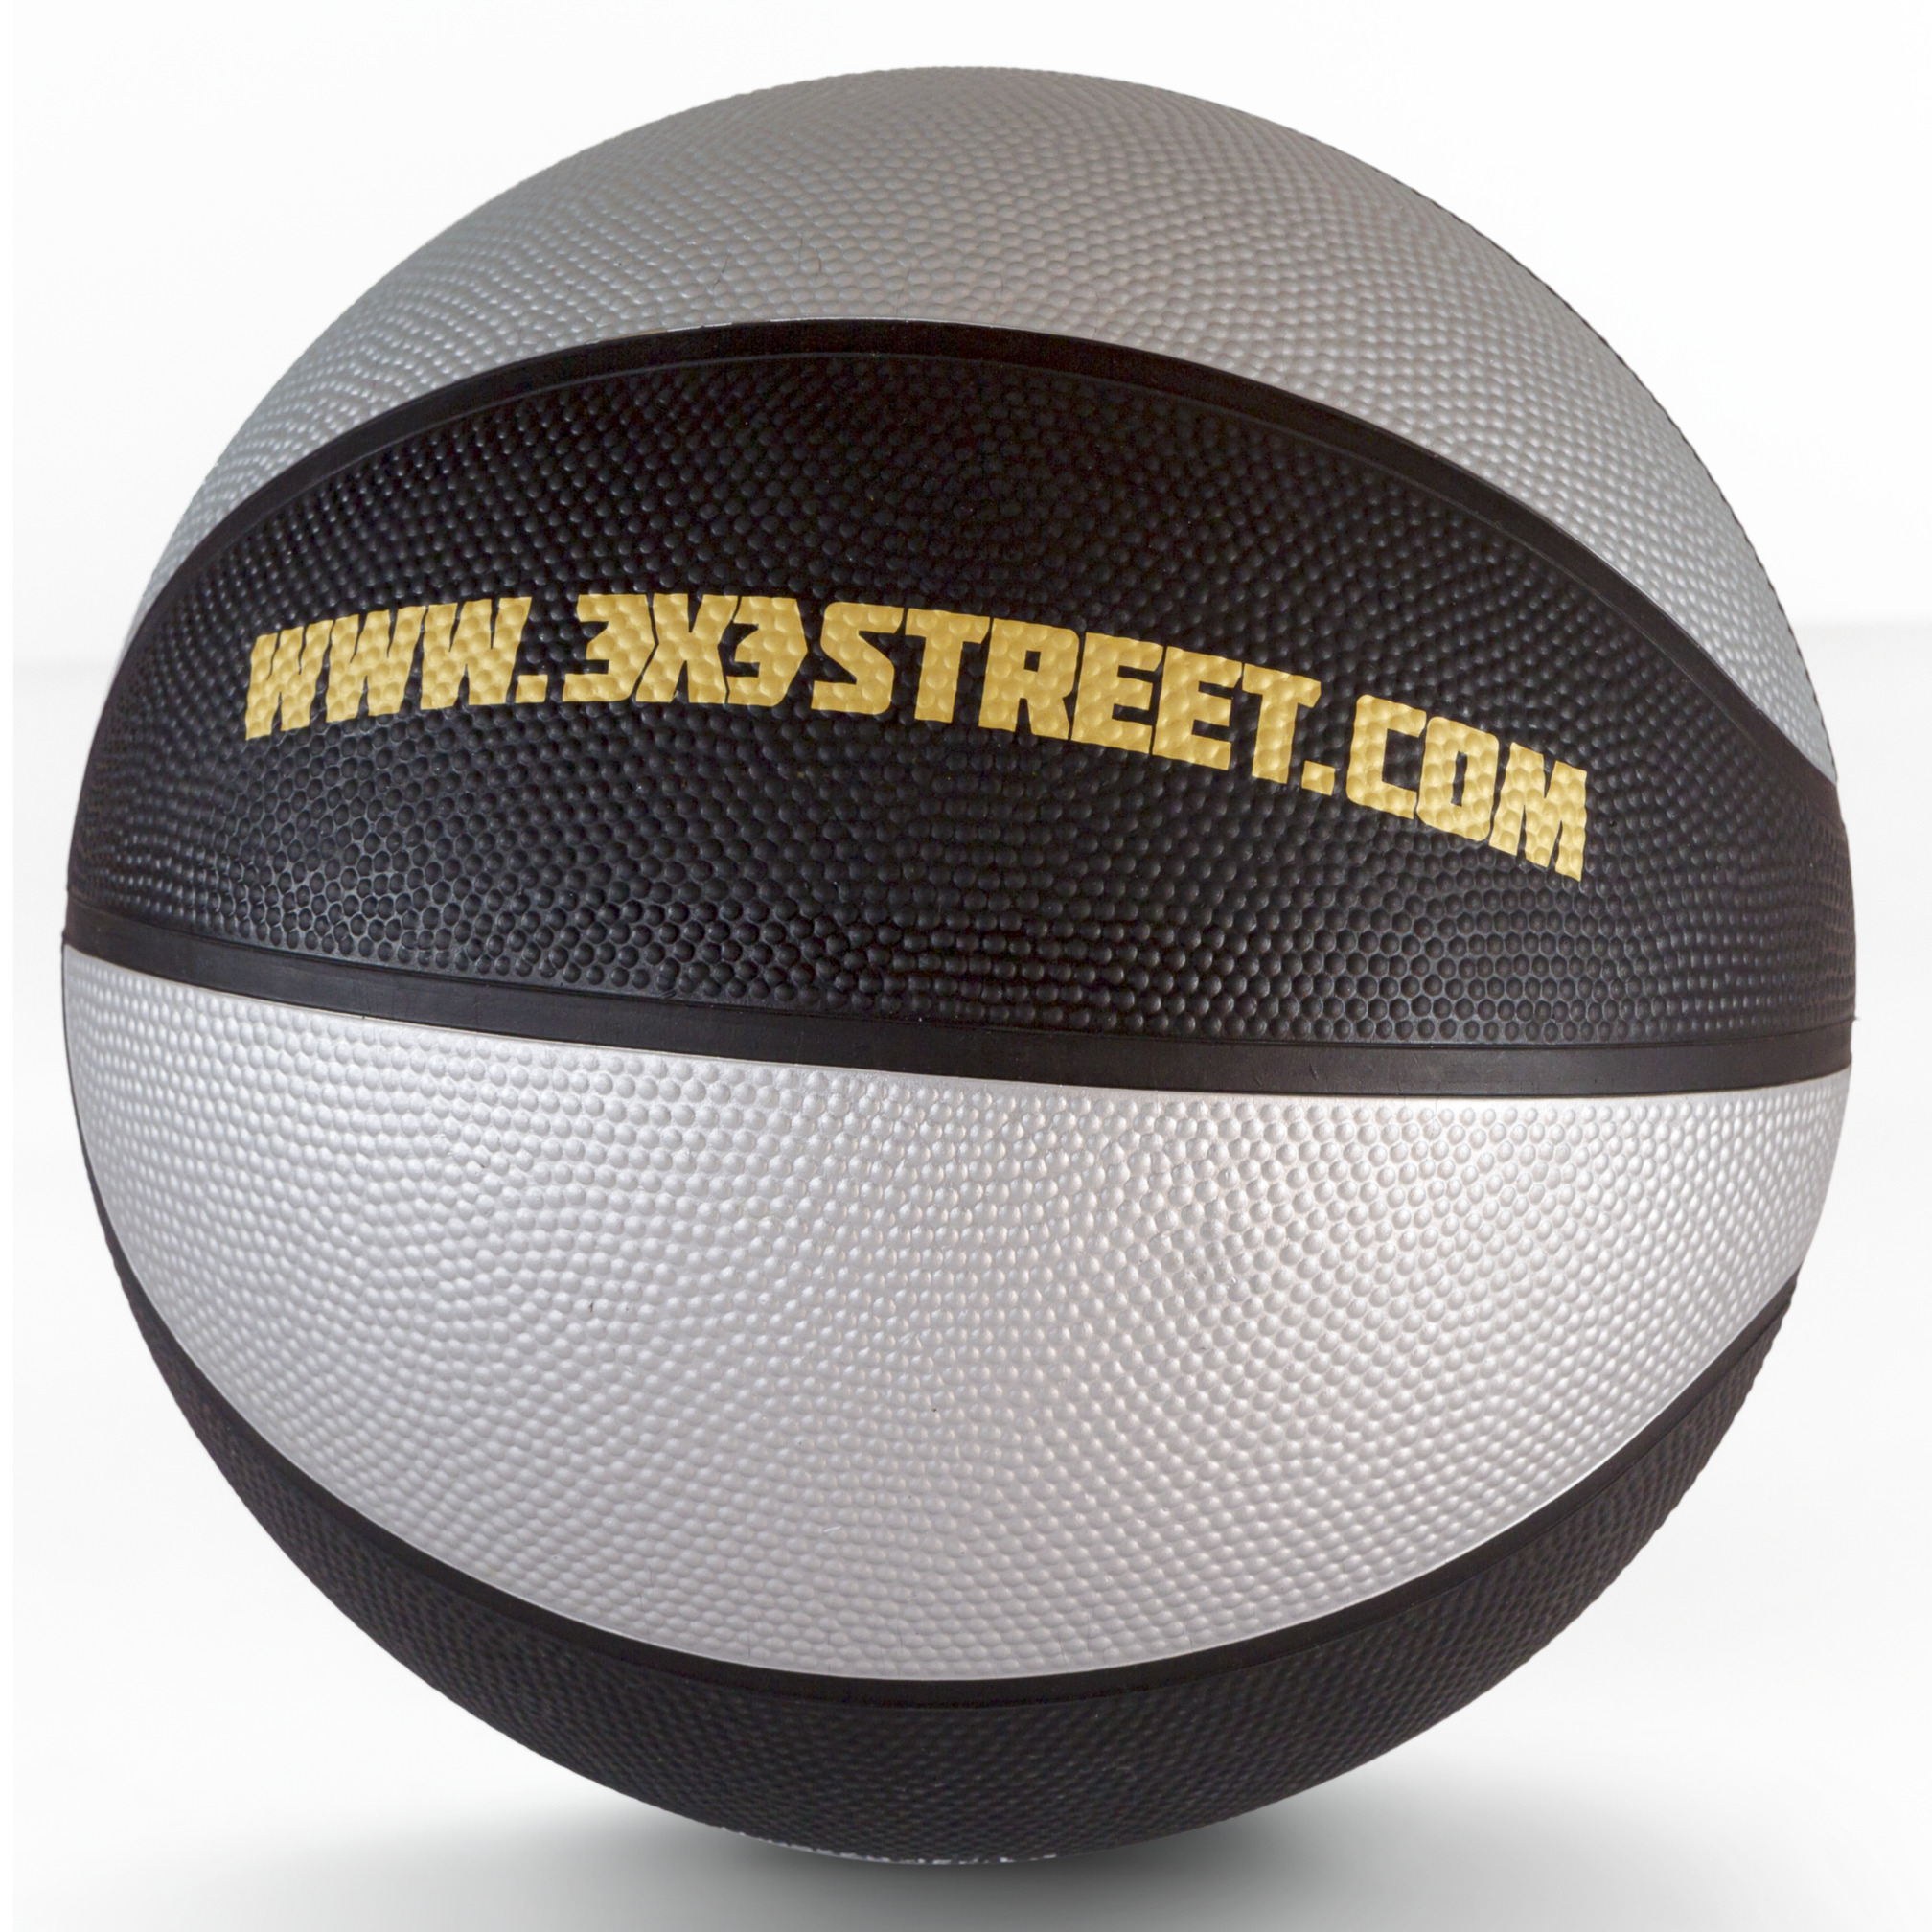 Schelde Sports Basketball 3x3 Street, Size 6